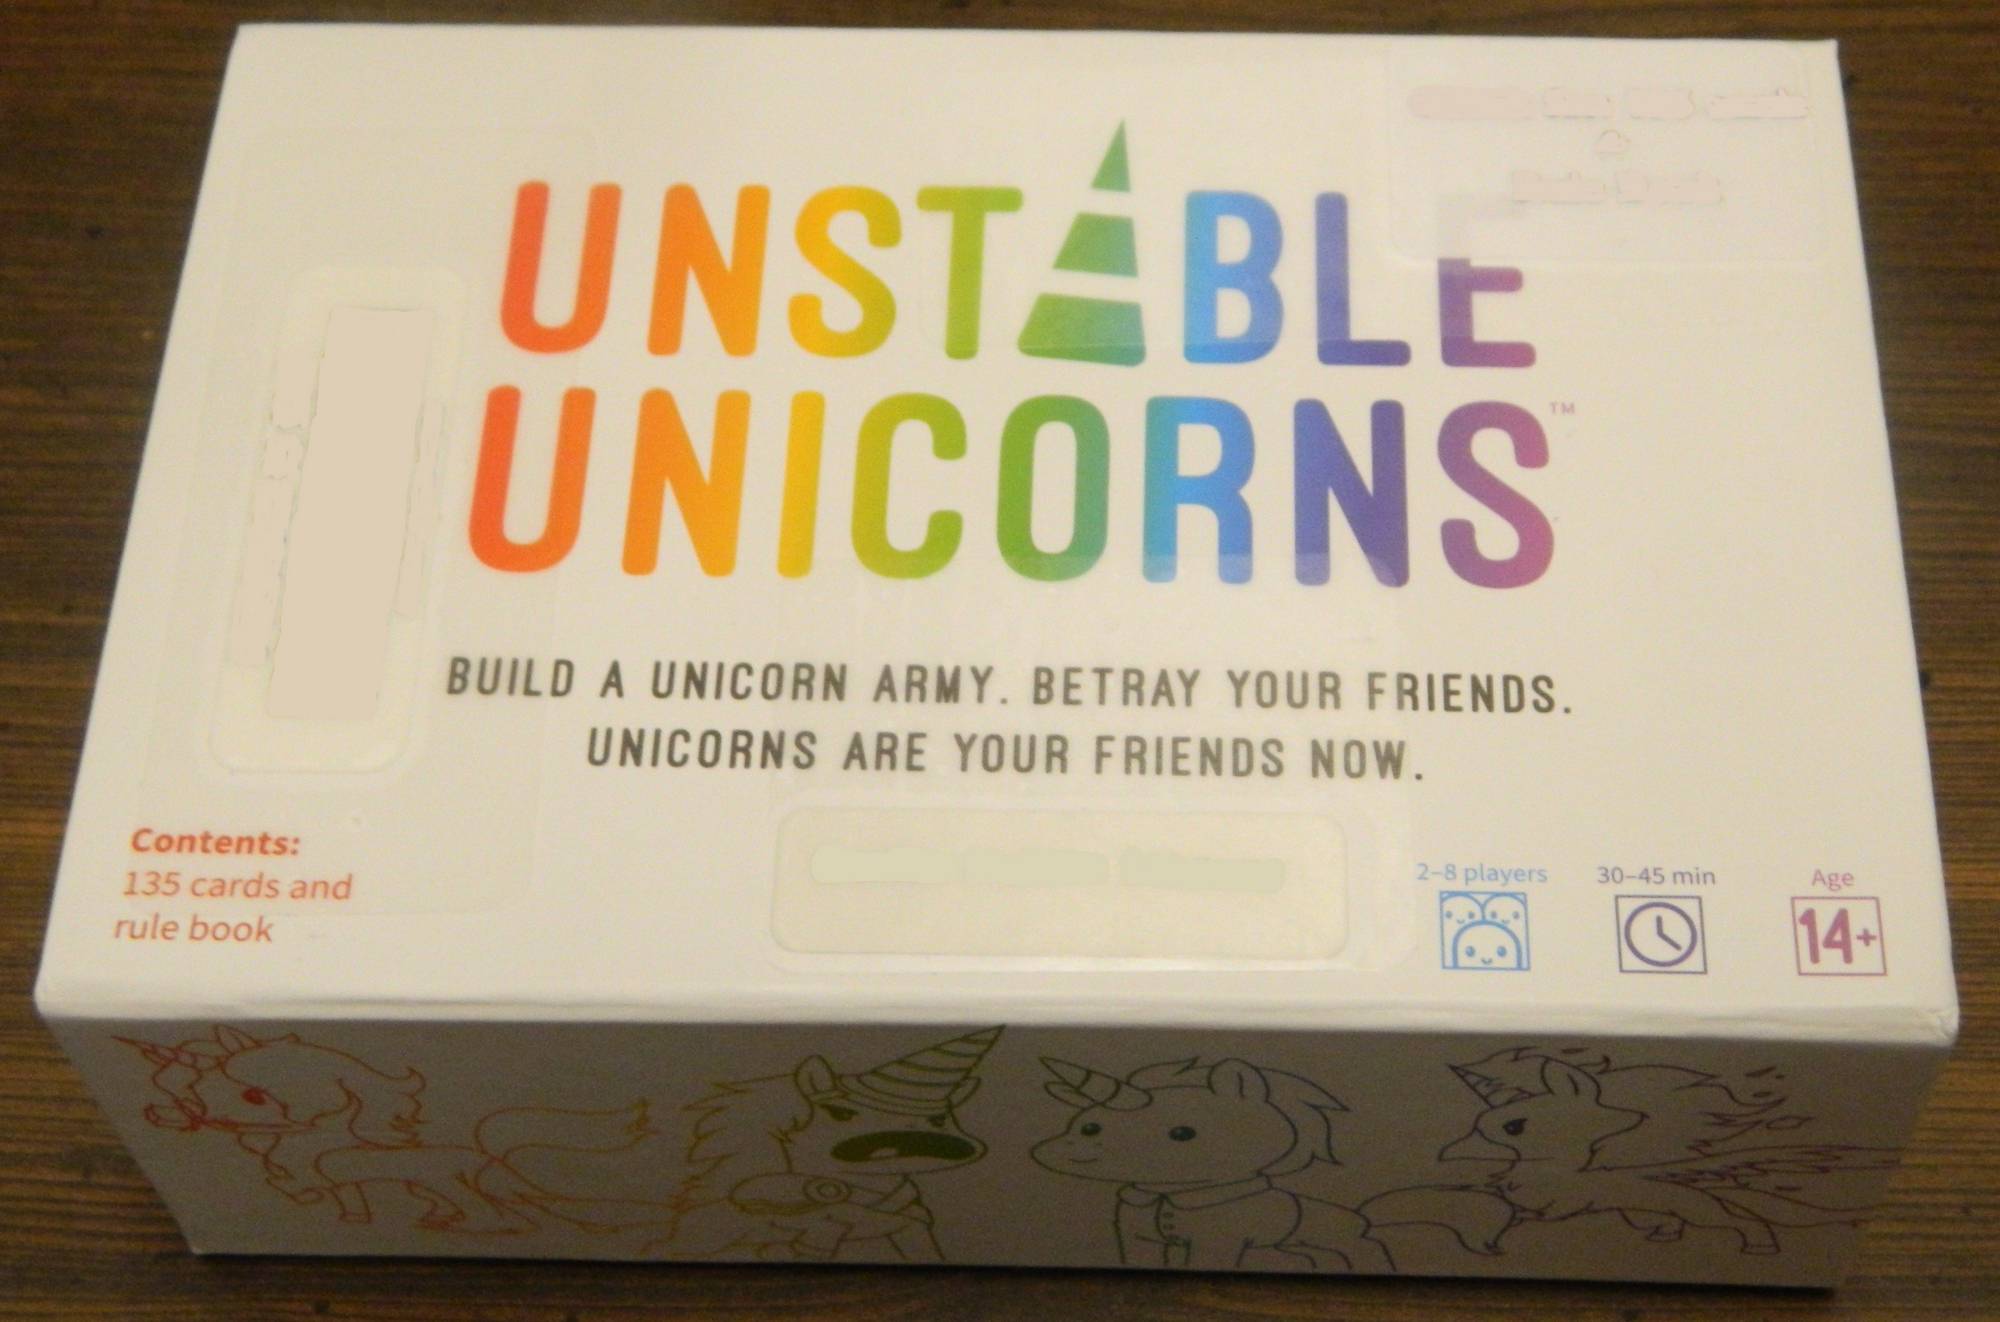 Box for Unstable Unicorns